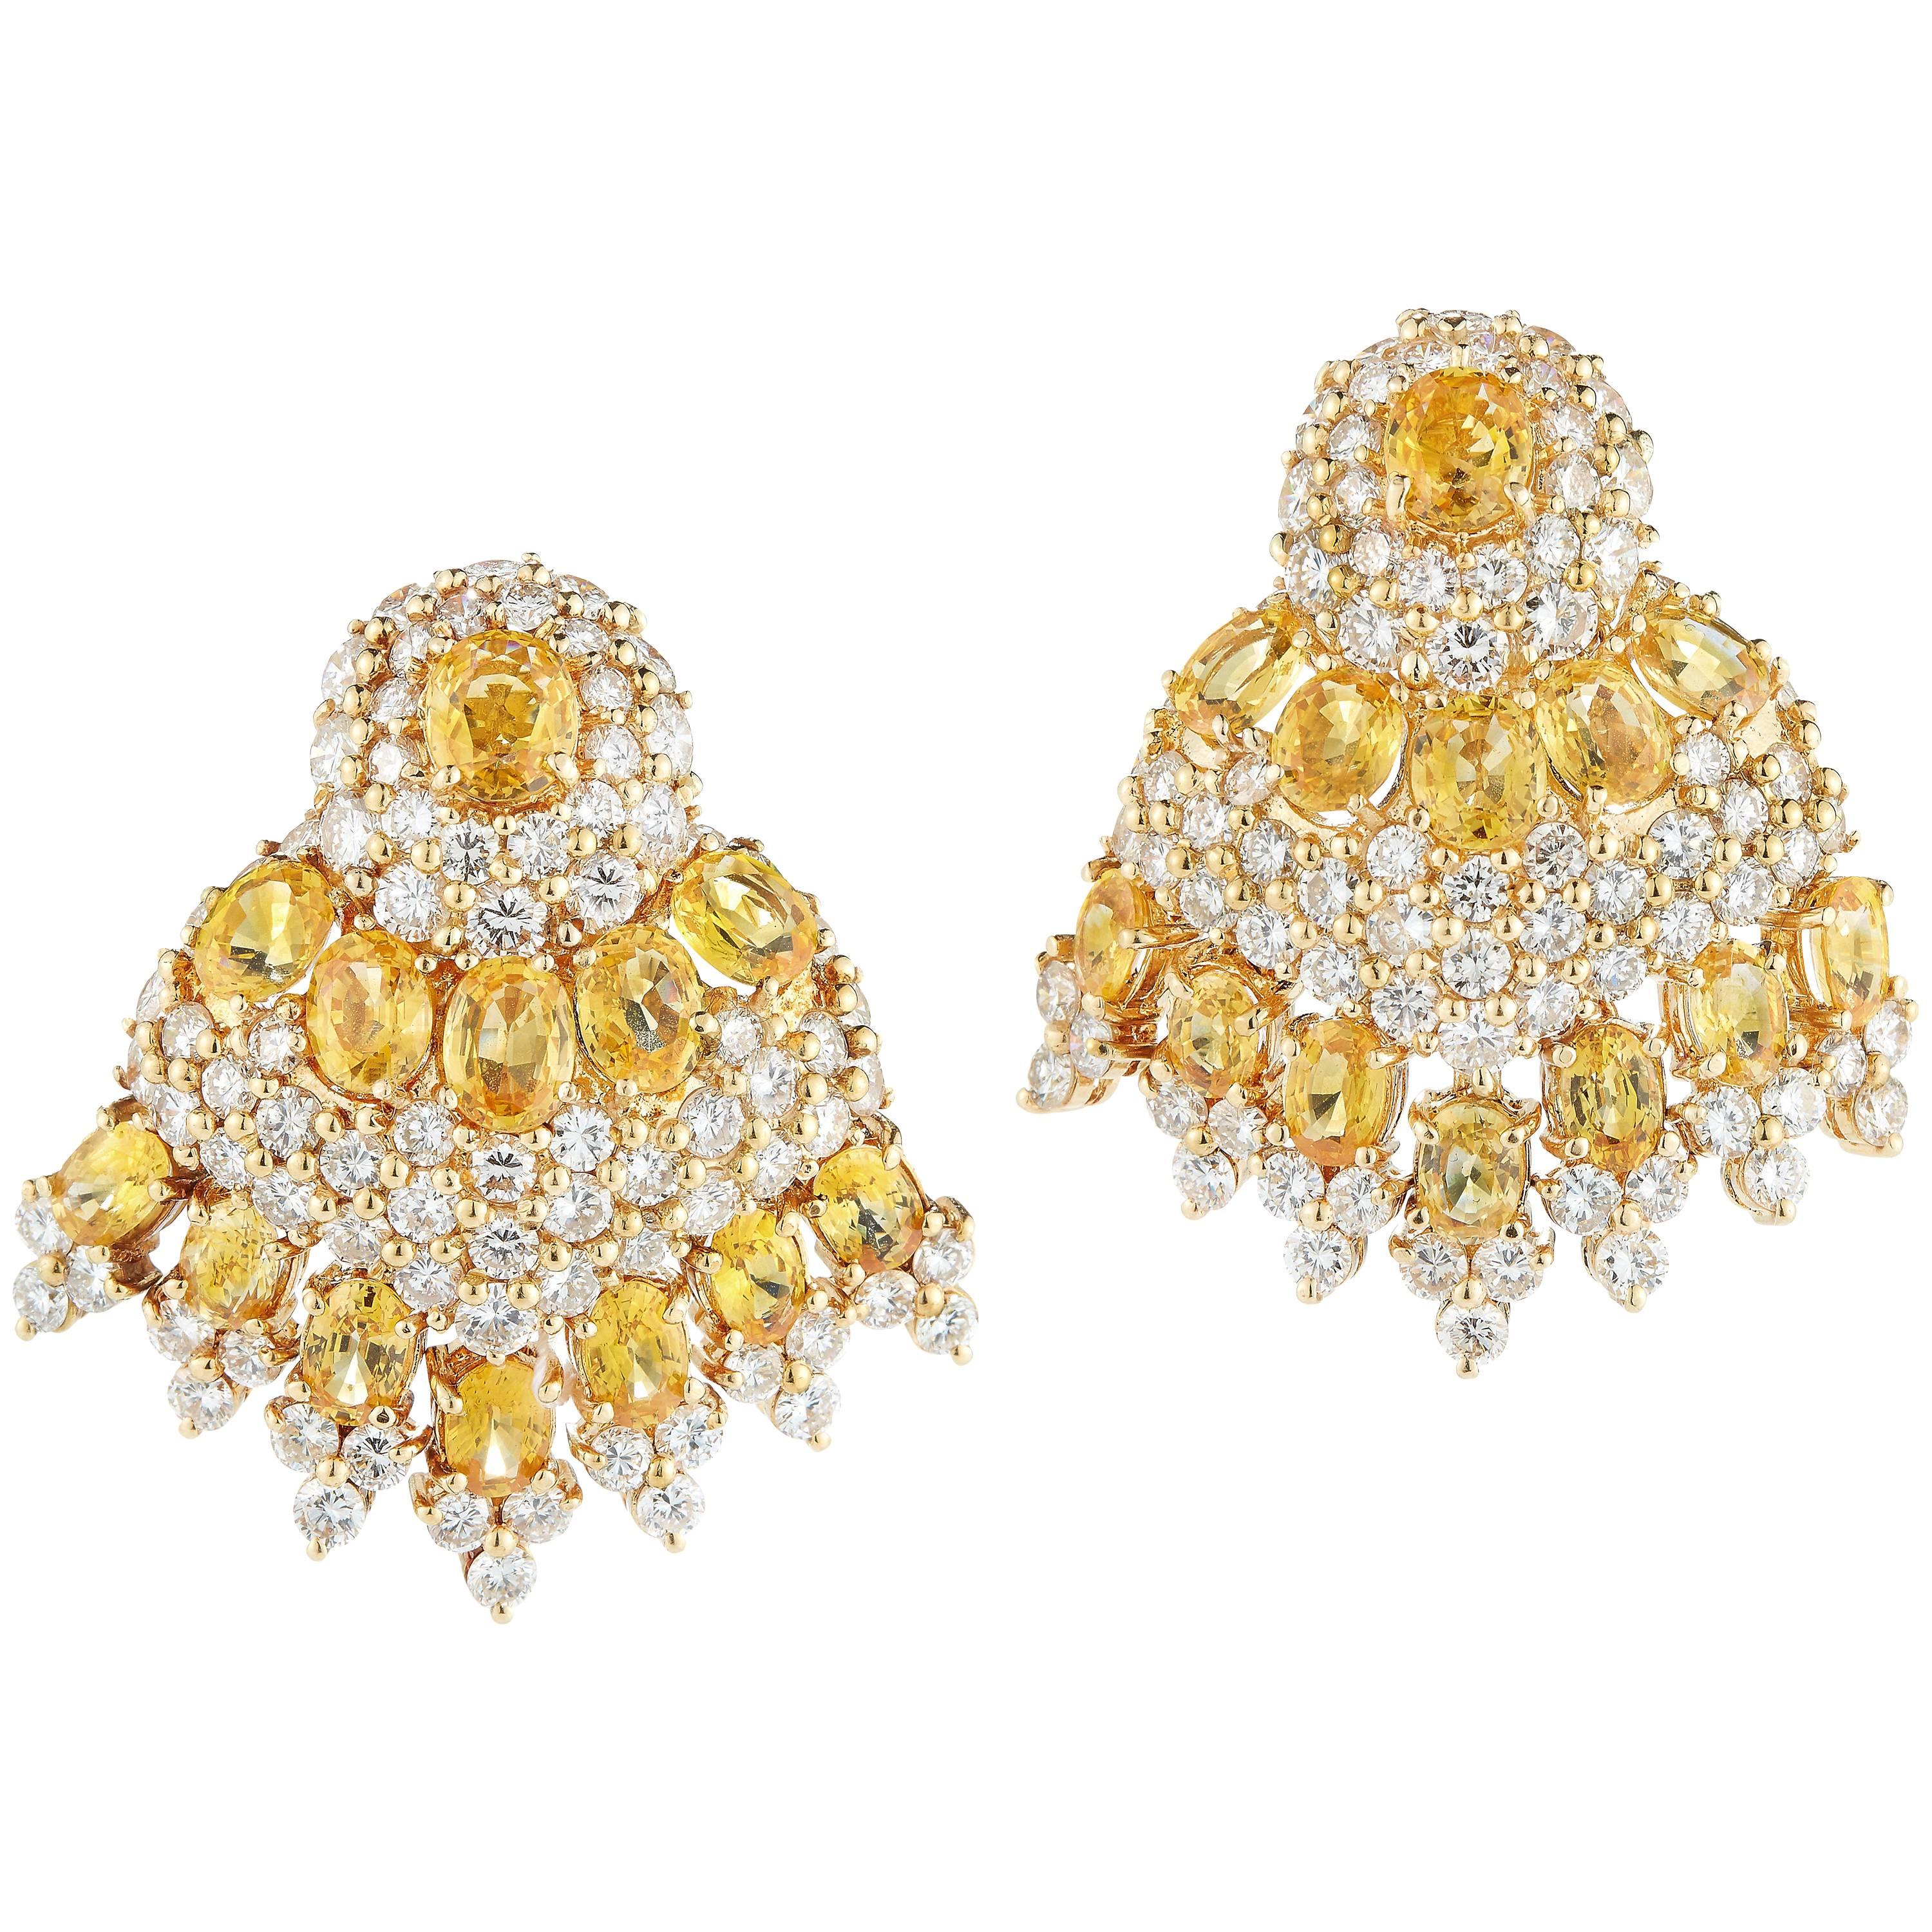 Beautiful 18 Karat Yellow Gold and Diamond Earring